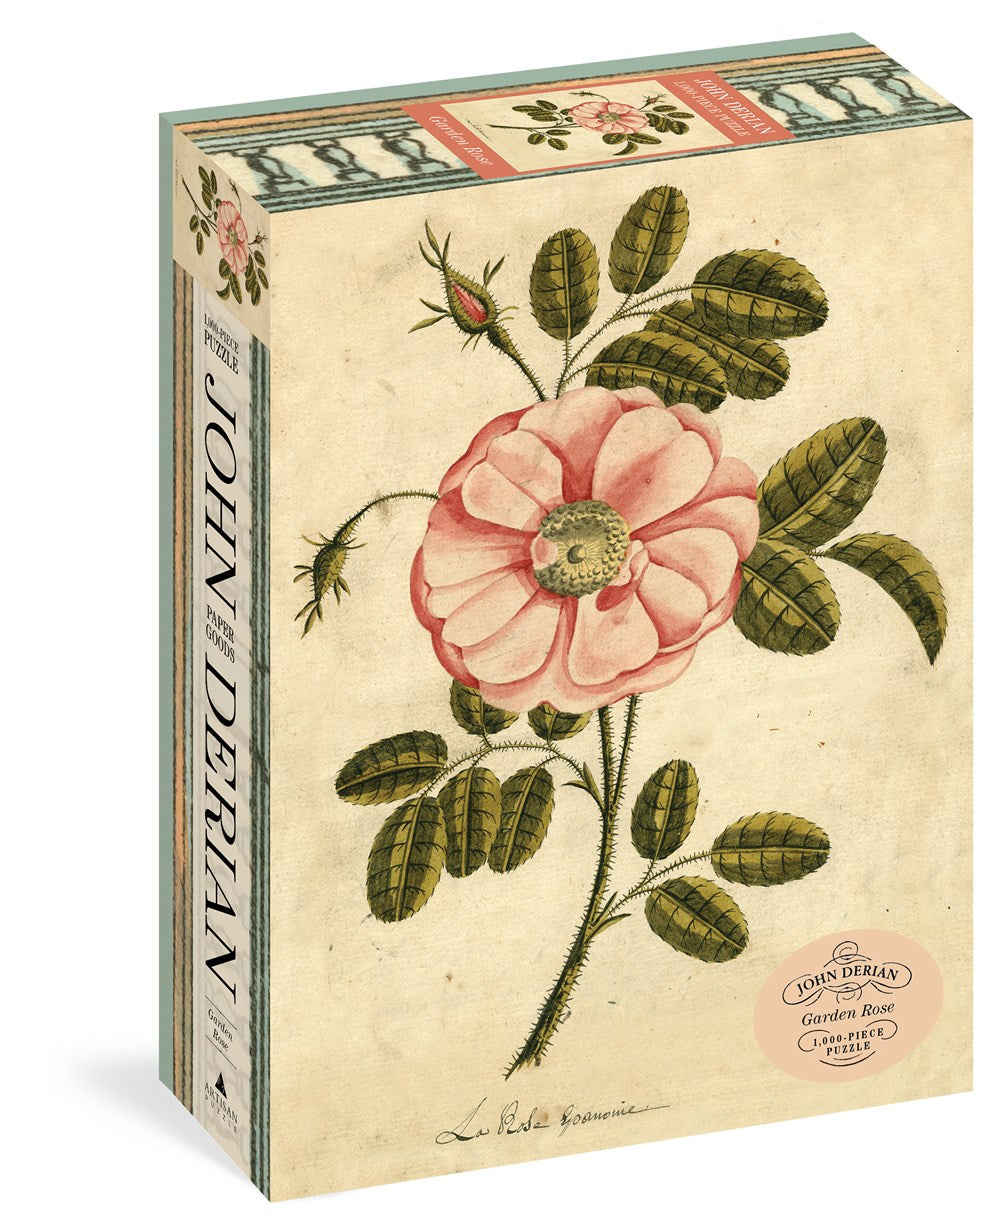 Garden Rose - John Derian - 1,000 Pieces